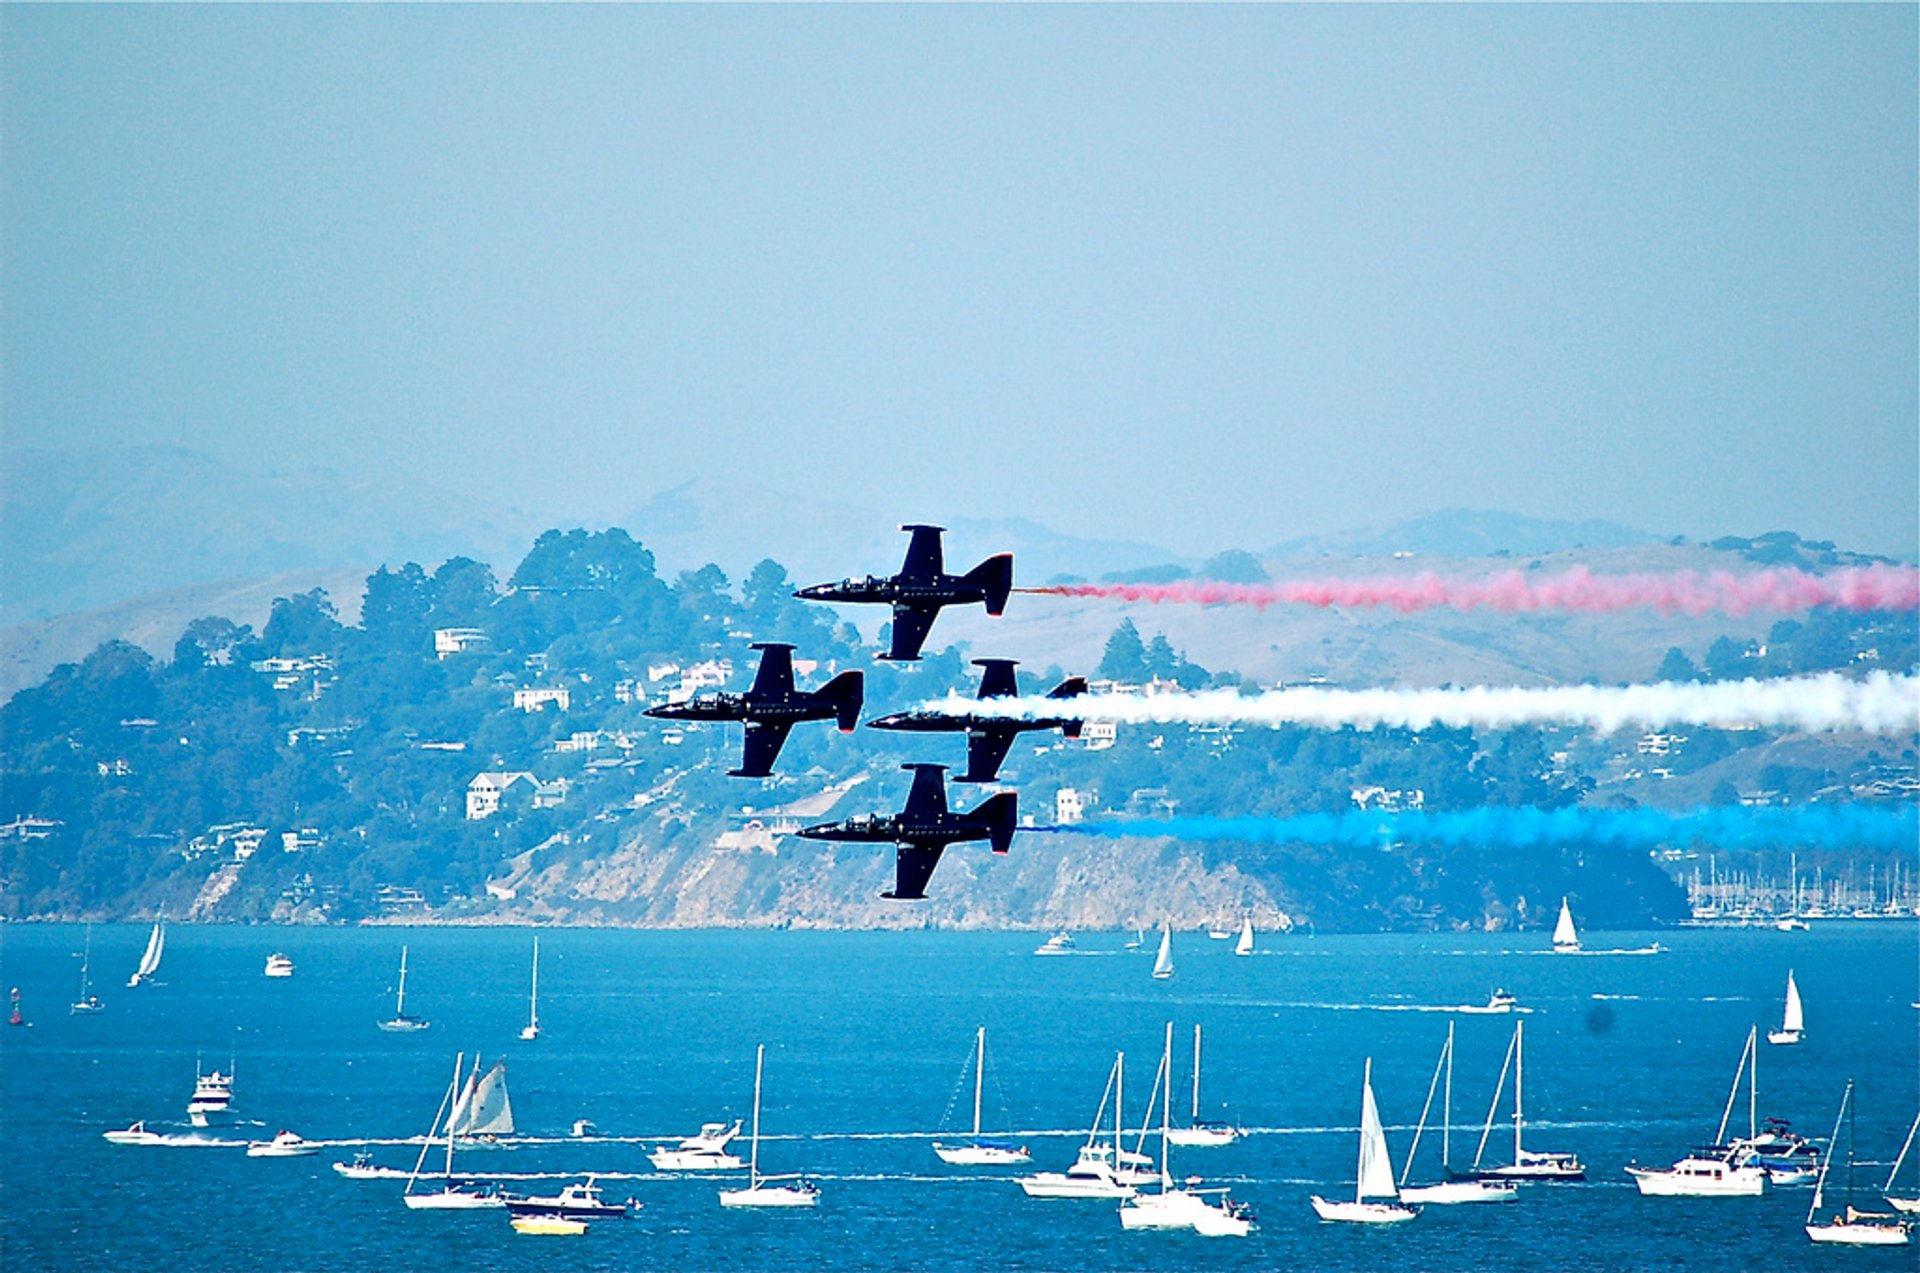 Settimana della Flotta di San Francisco (San Francisco Fleet Week)